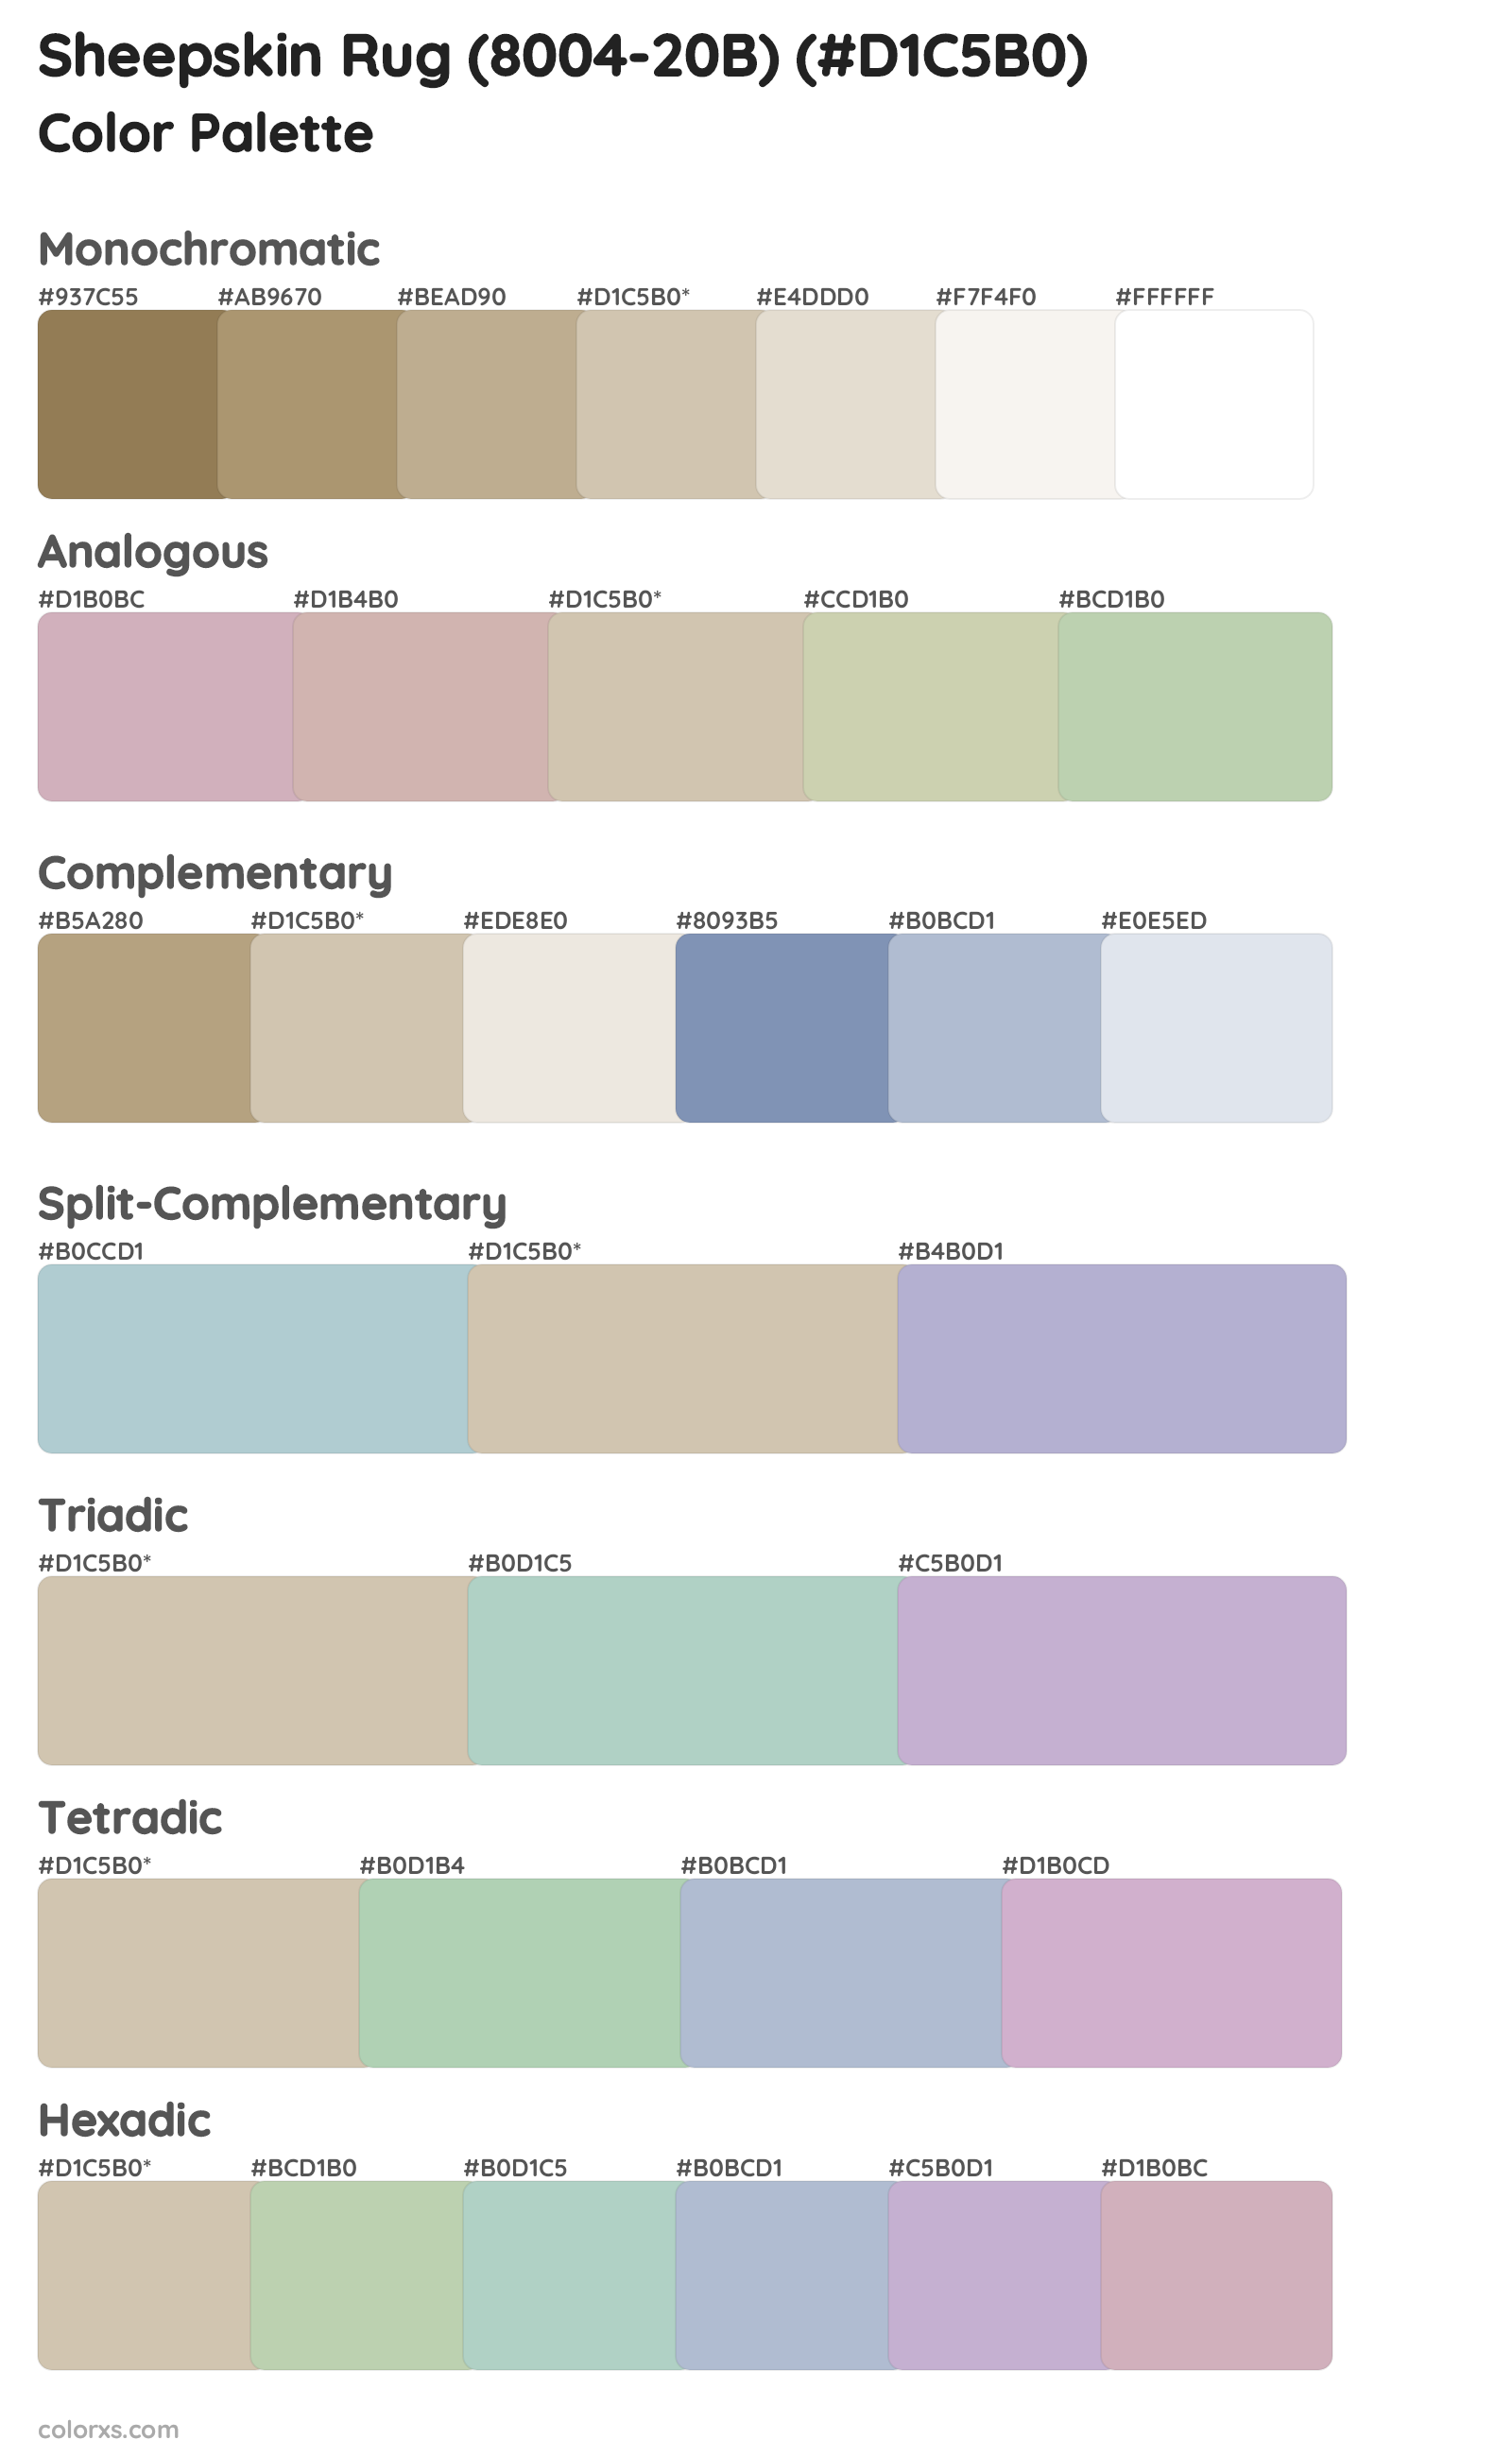 Sheepskin Rug (8004-20B) Color Scheme Palettes